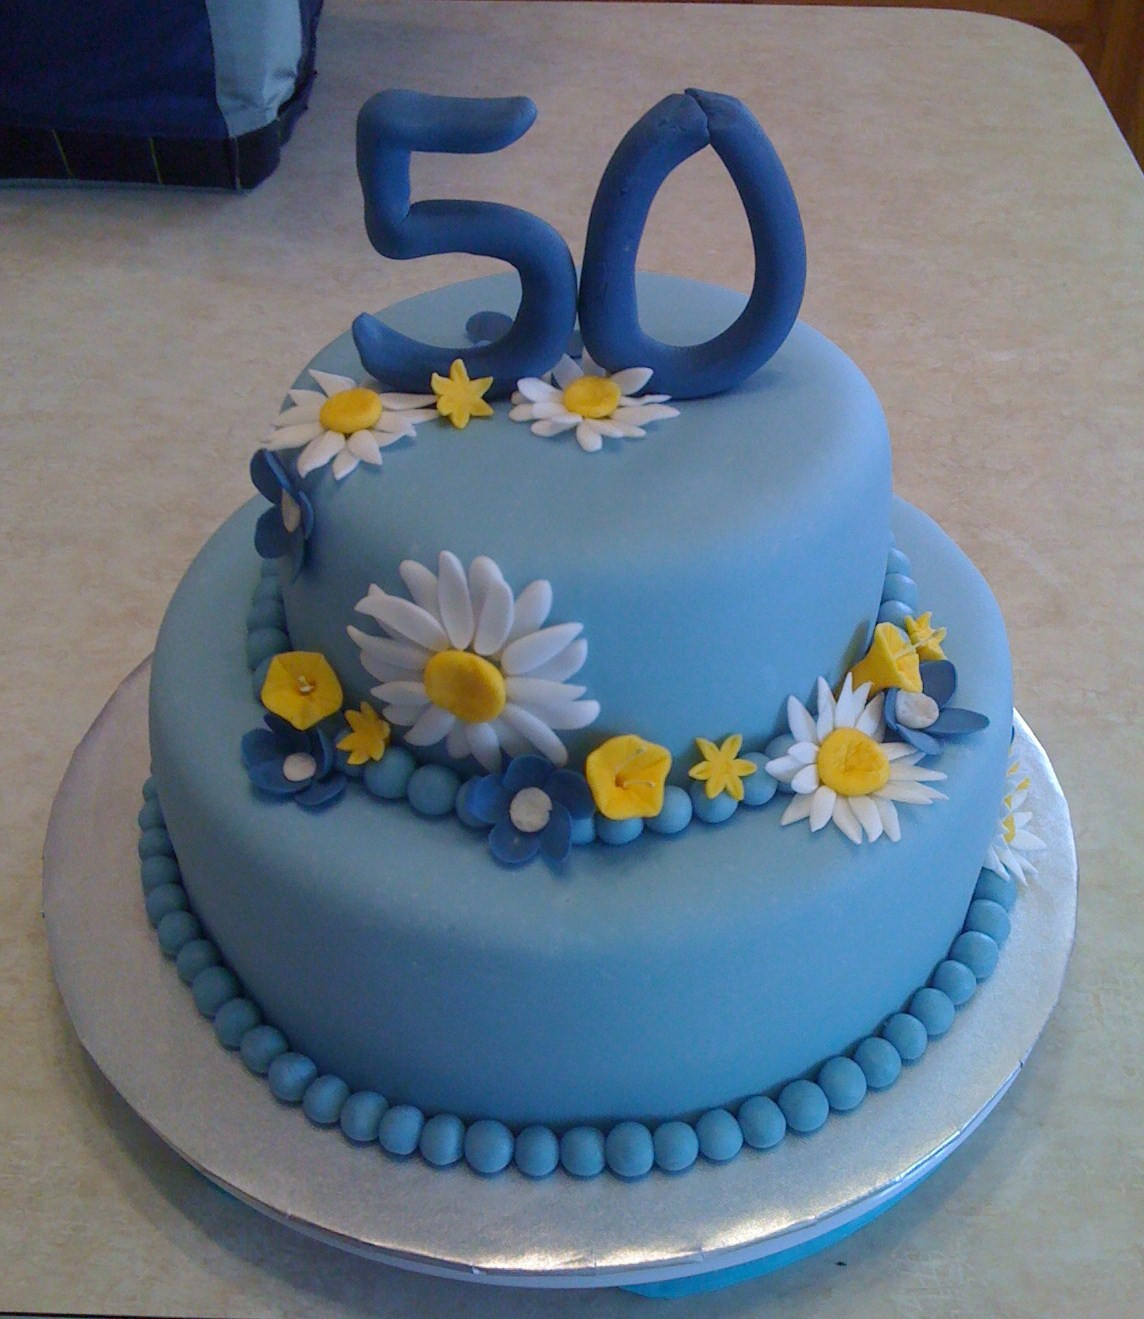 50th Birthday Cake Images
 50th Birthday Daisy Cake